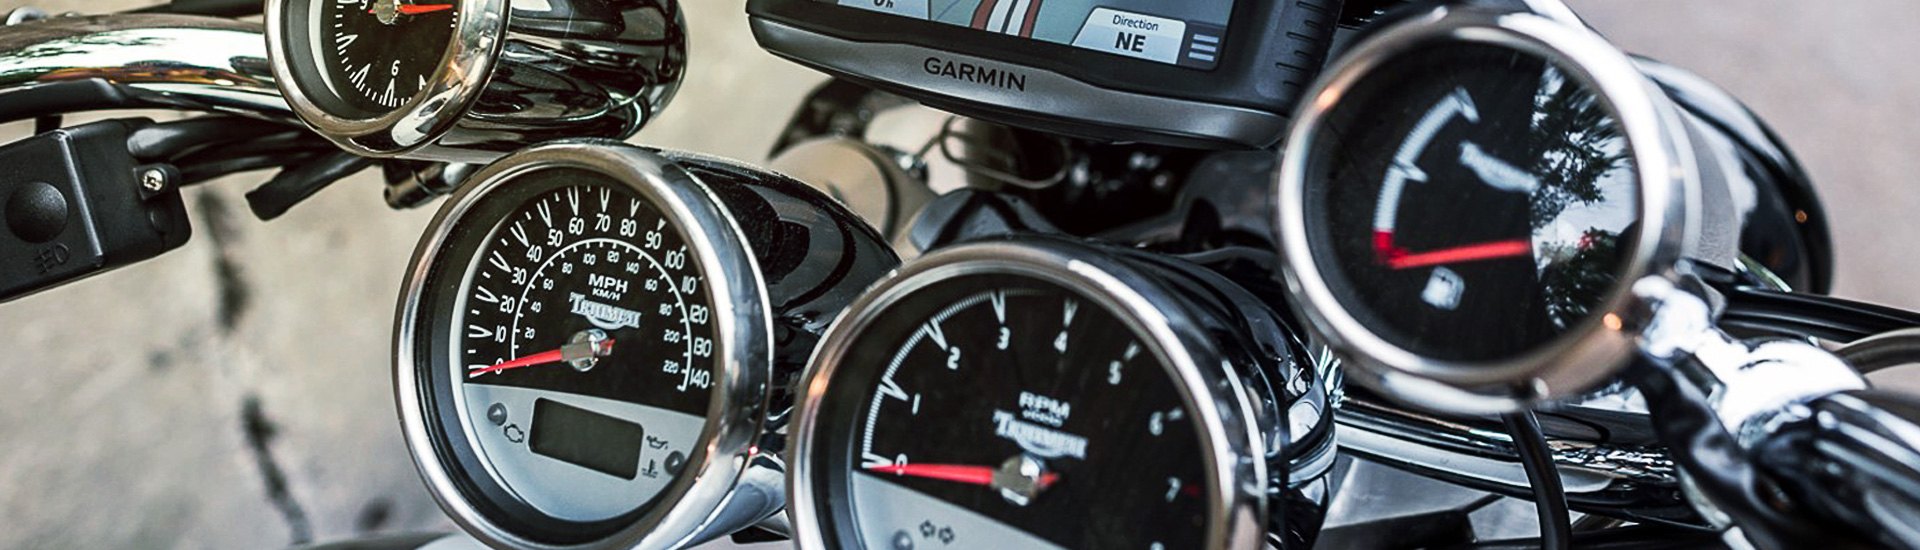 D DOLITY LED Backlight Odometer Speedometer Tachometer Oil Fuel Lever Indicator for Motorcycle Custom Cruiser Café Racer Black 